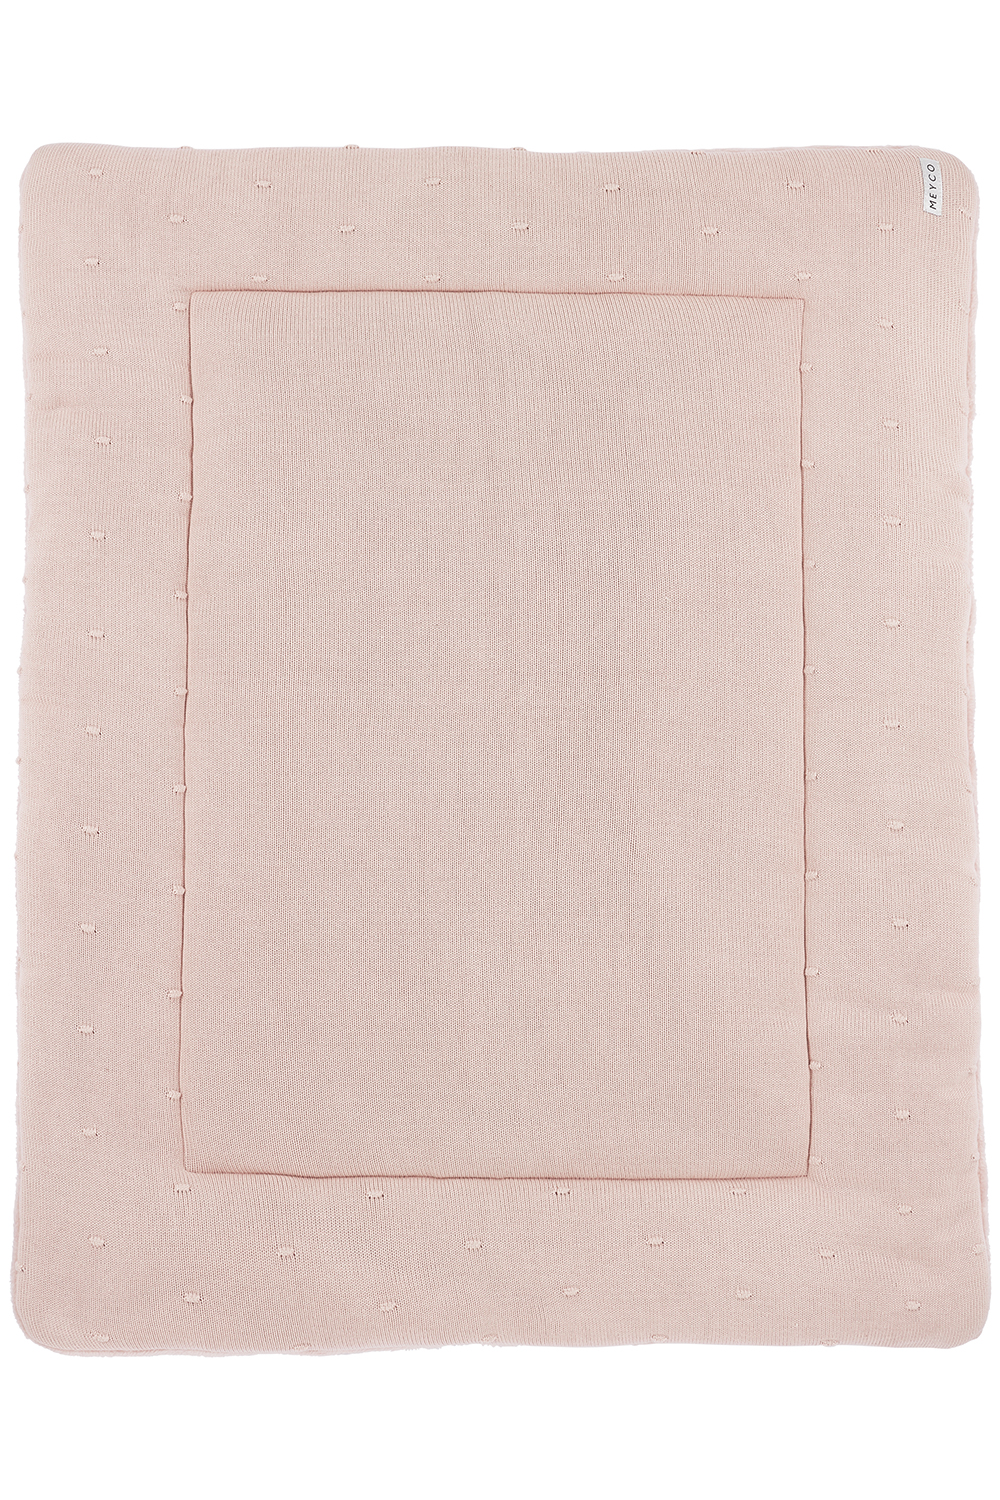 Boxkleed - soft pink - 77x97cm